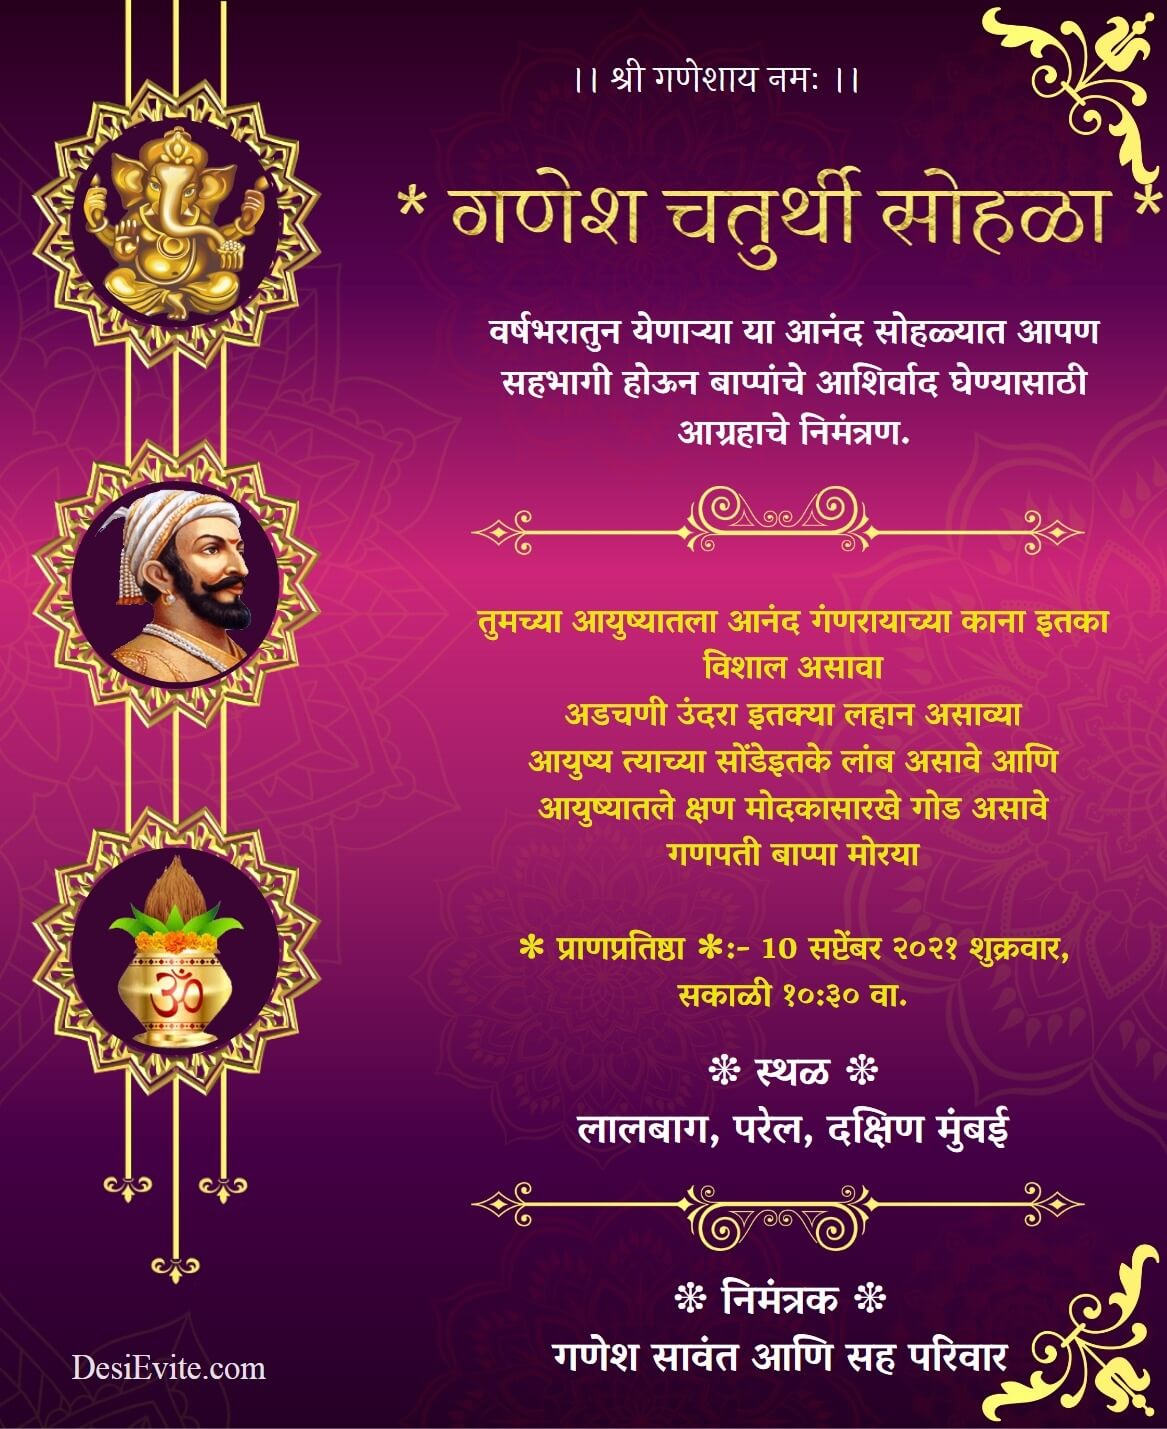 Ganesh festival invitation ecard with Shivaji Maharaj Photo